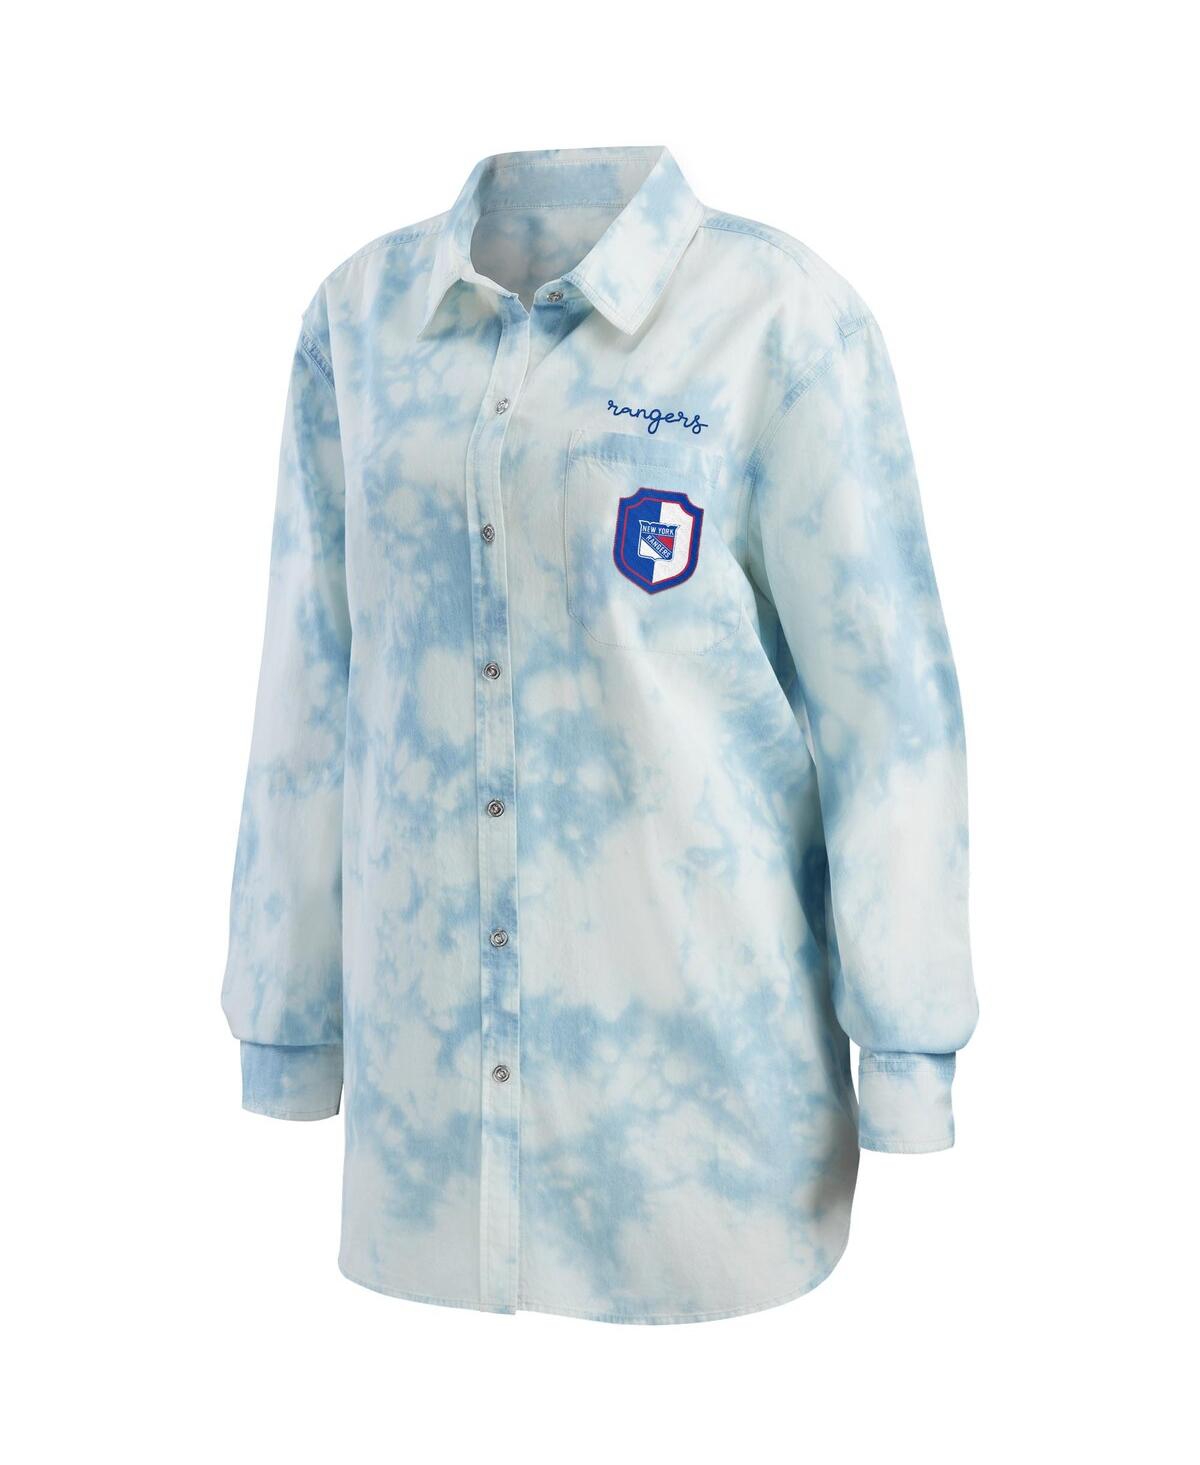 Shop Wear By Erin Andrews Women's  White New York Rangers Oversized Tie-dye Button-up Denim Shirt